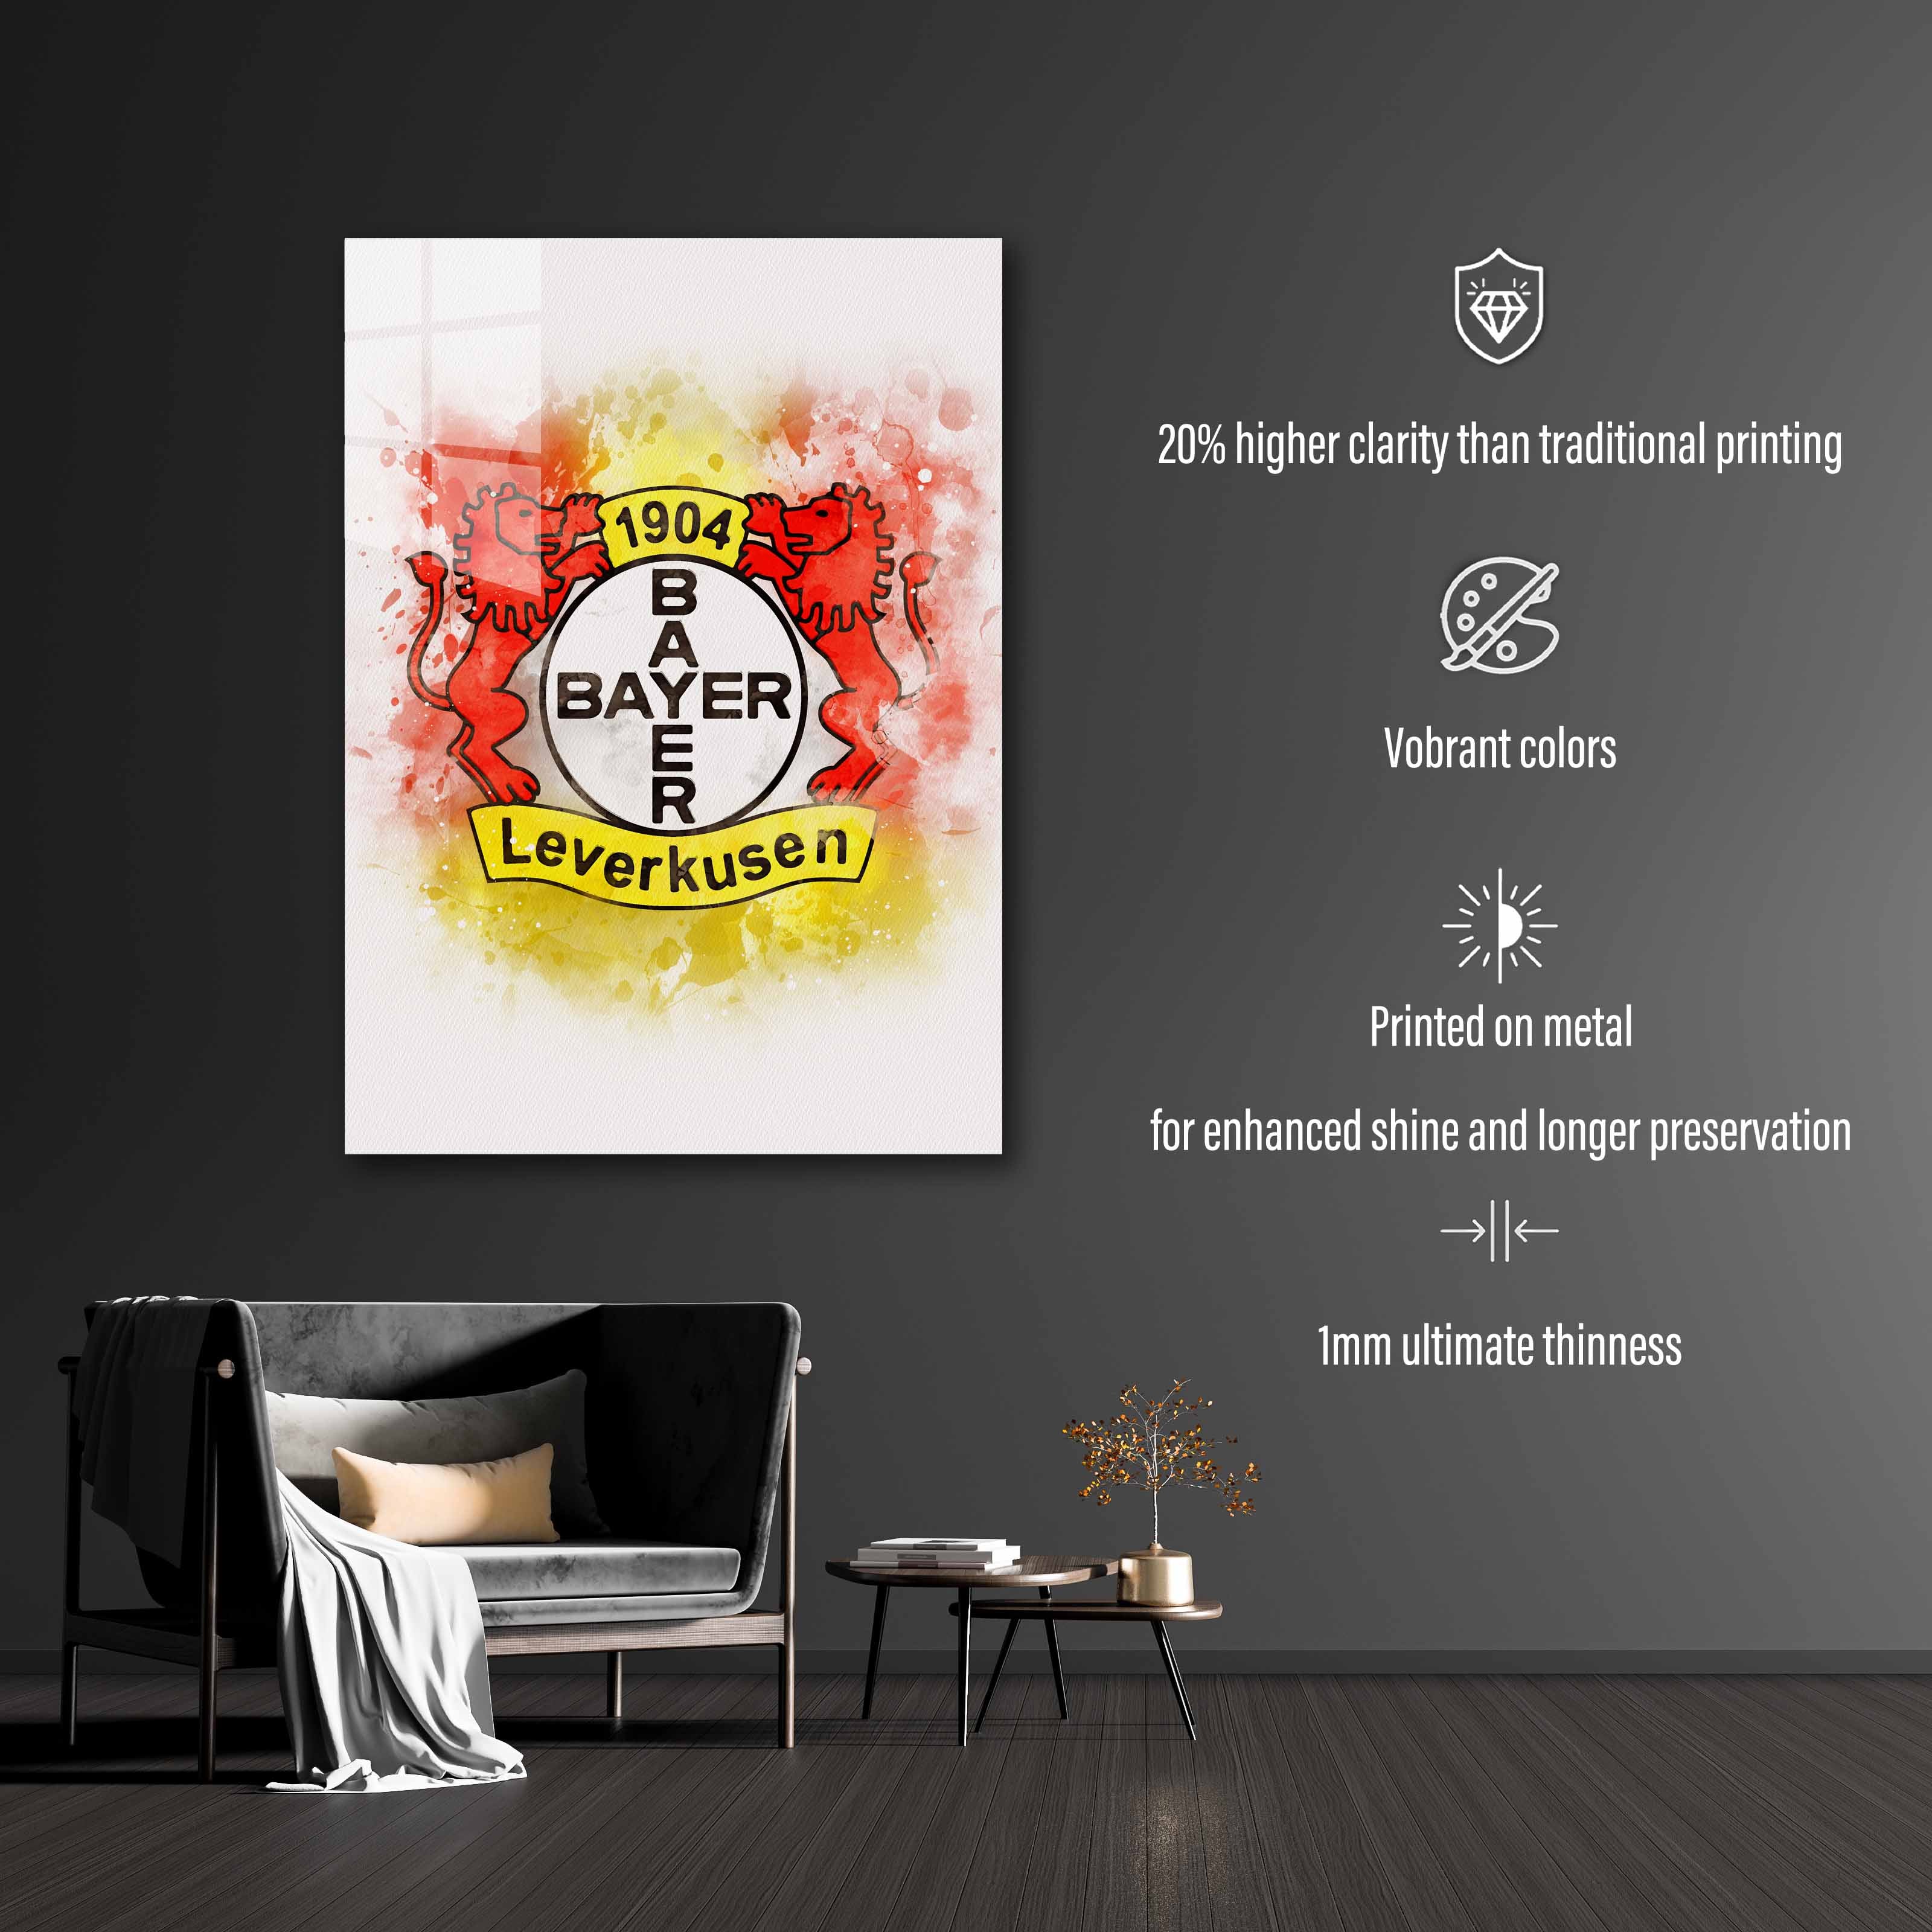 Bayer Leverkusen poster-designed by @Hoang Van Thuan